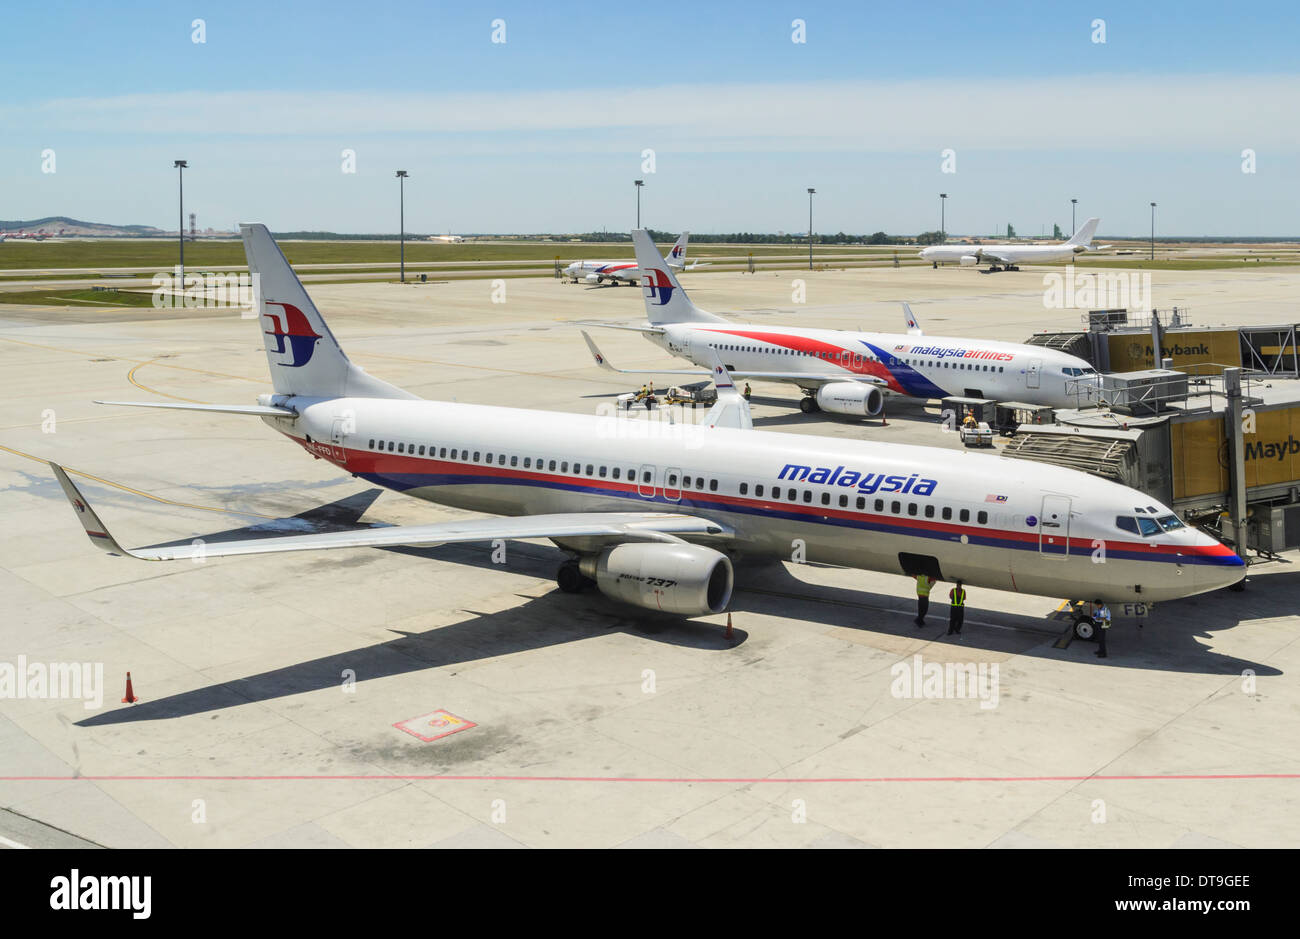 Malaysia Airlines planes at Kuala Lumpur International Airport Stock Photo